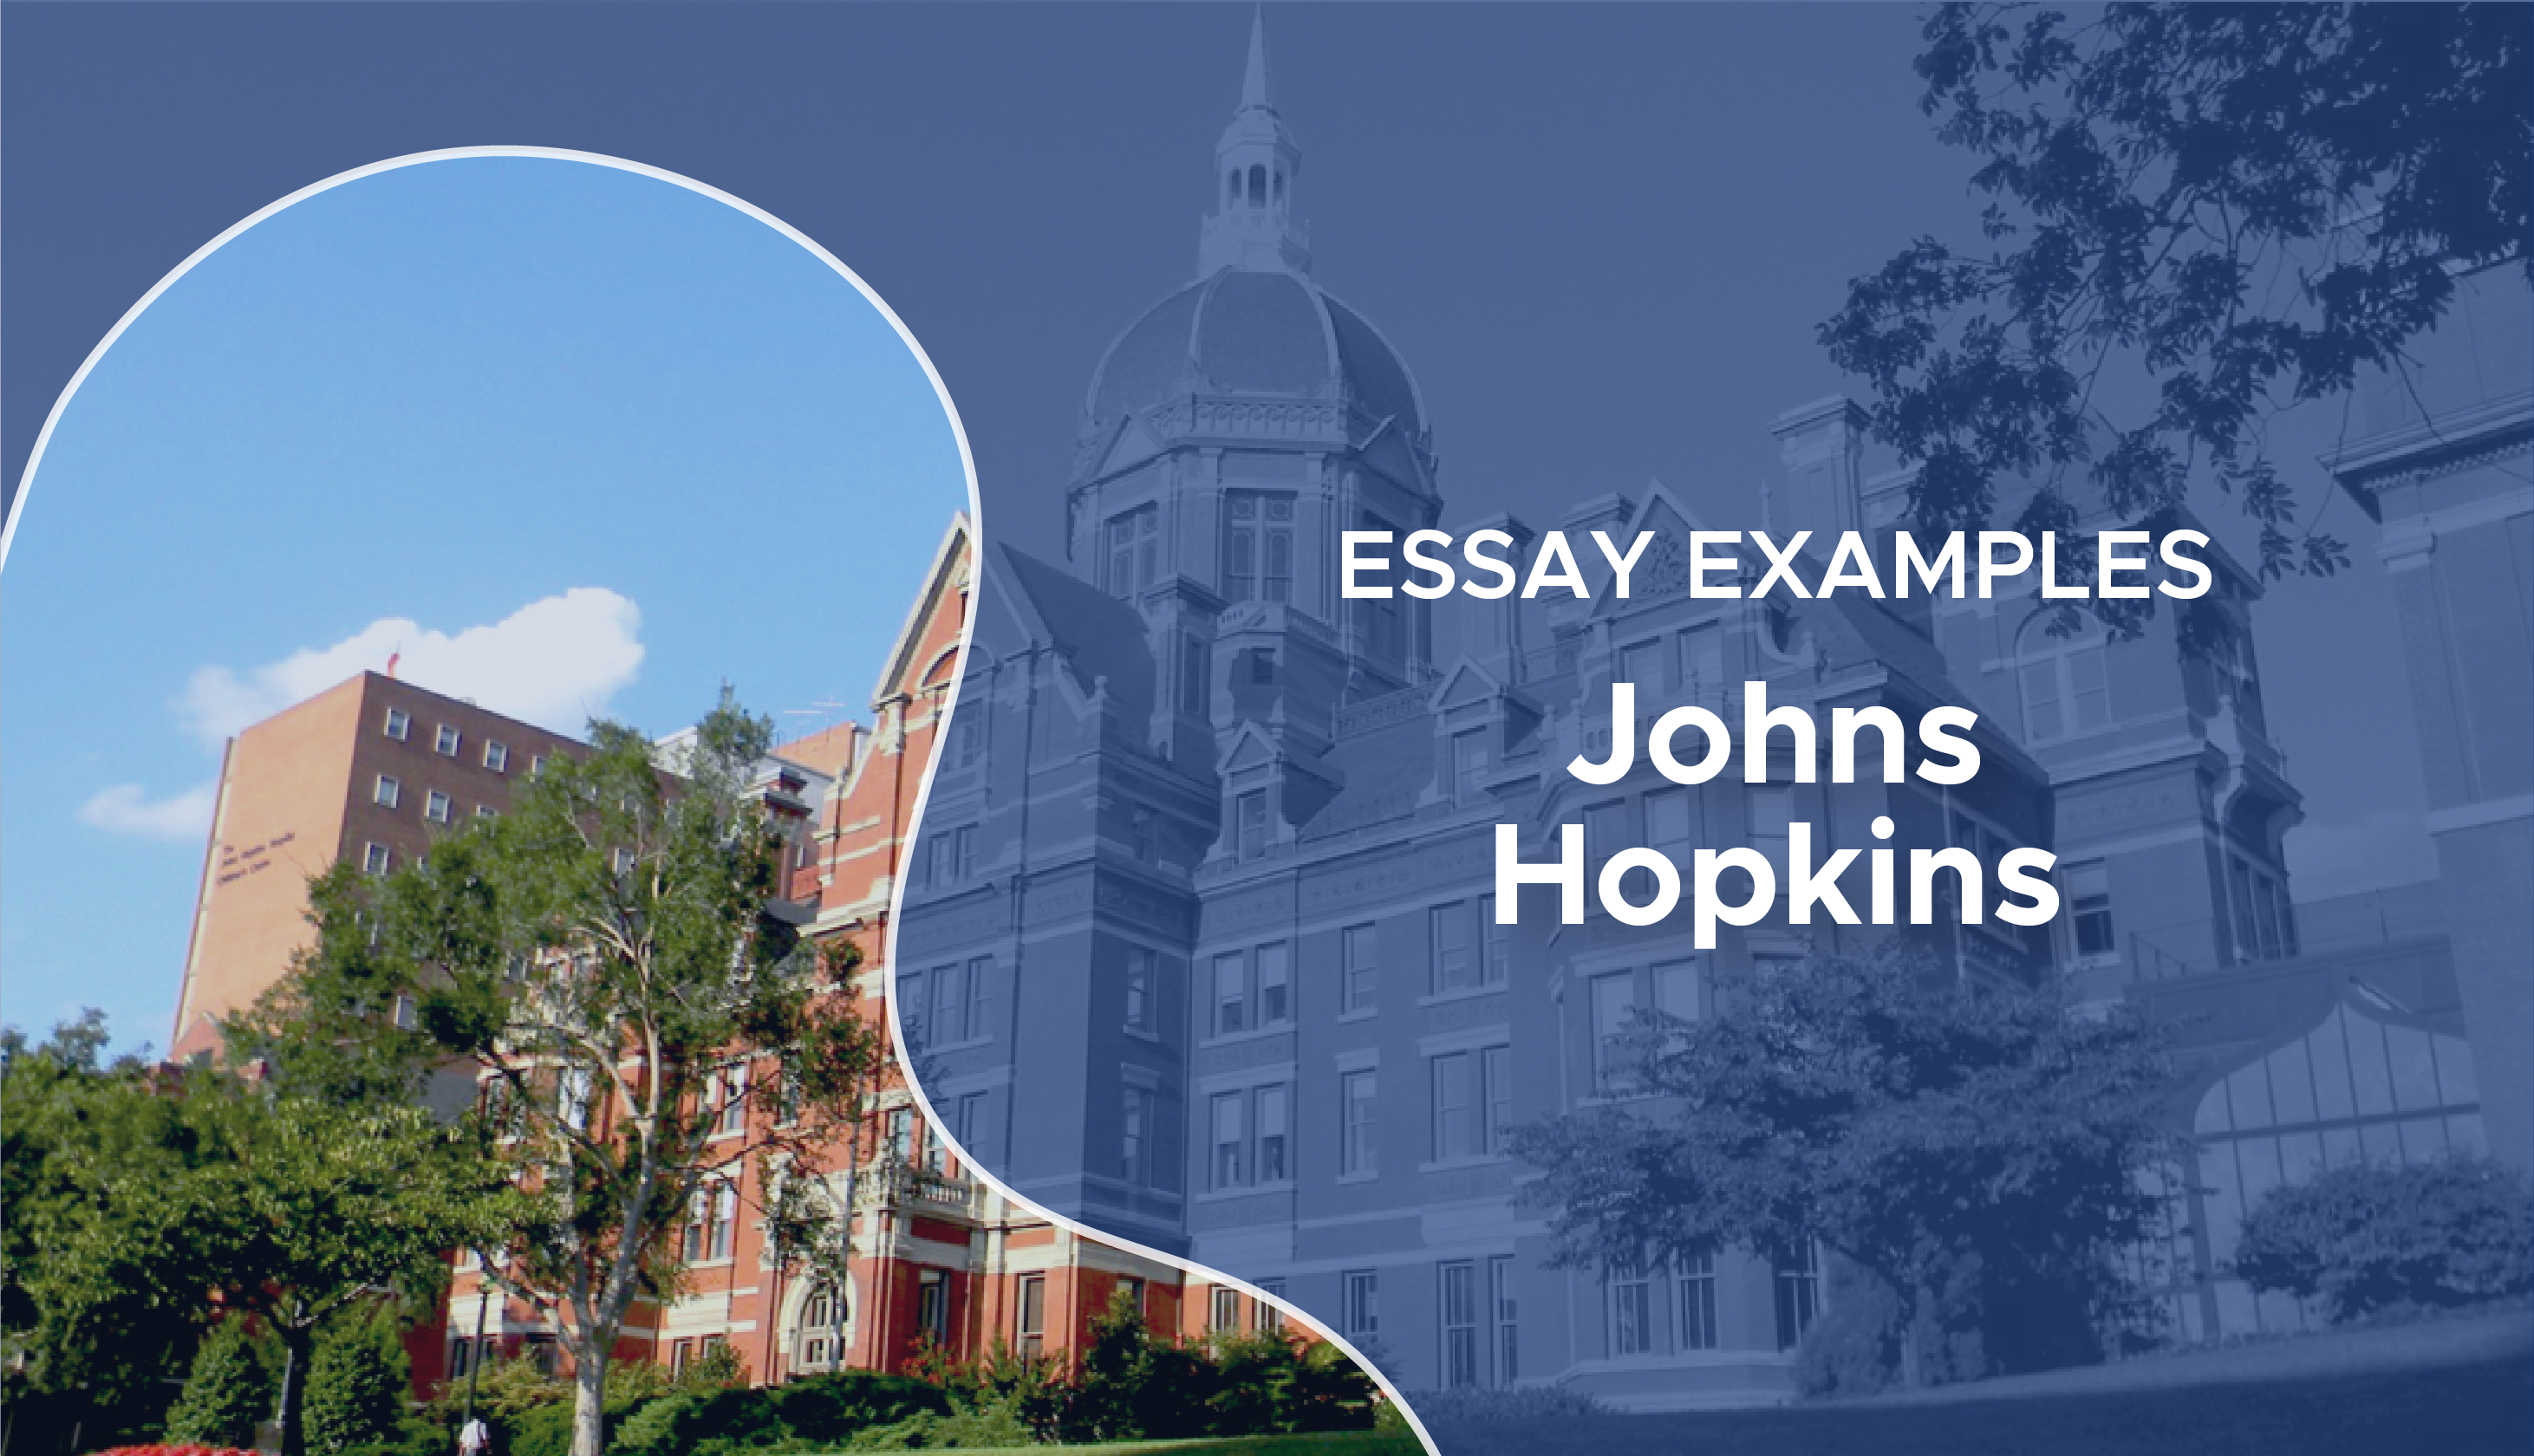 johns hopkins university essays that worked